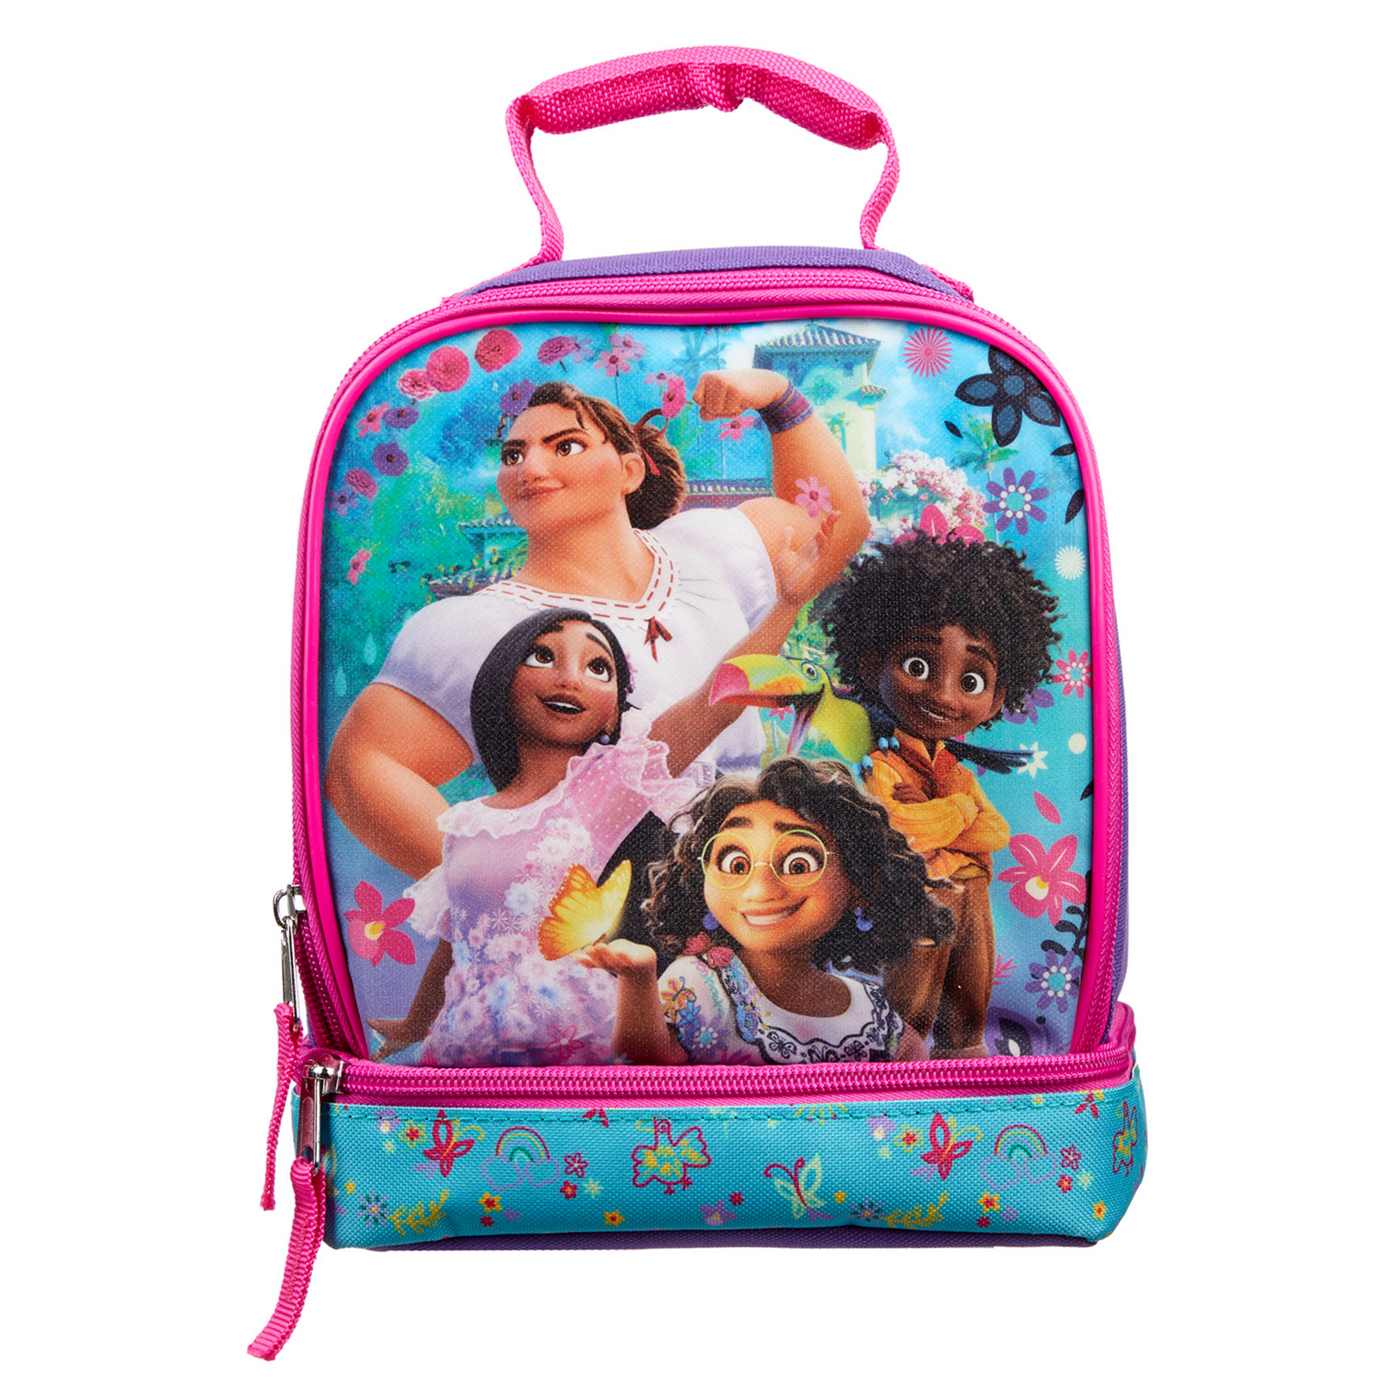 Disney Encanto Dual Compartment Lunch Bag; image 1 of 2